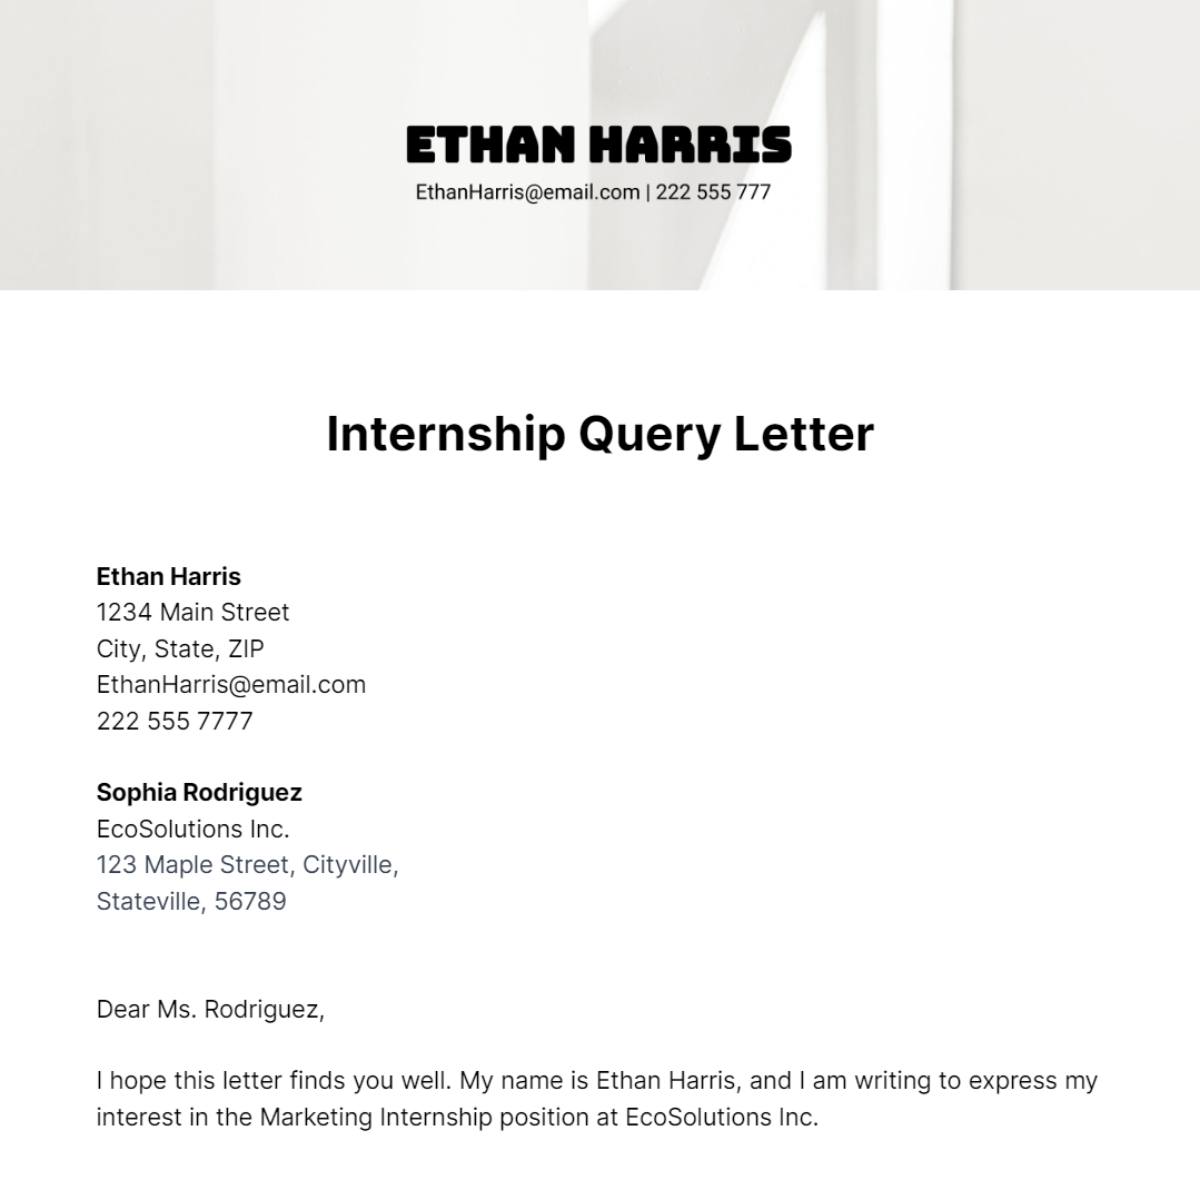 Internship Query Letter Template